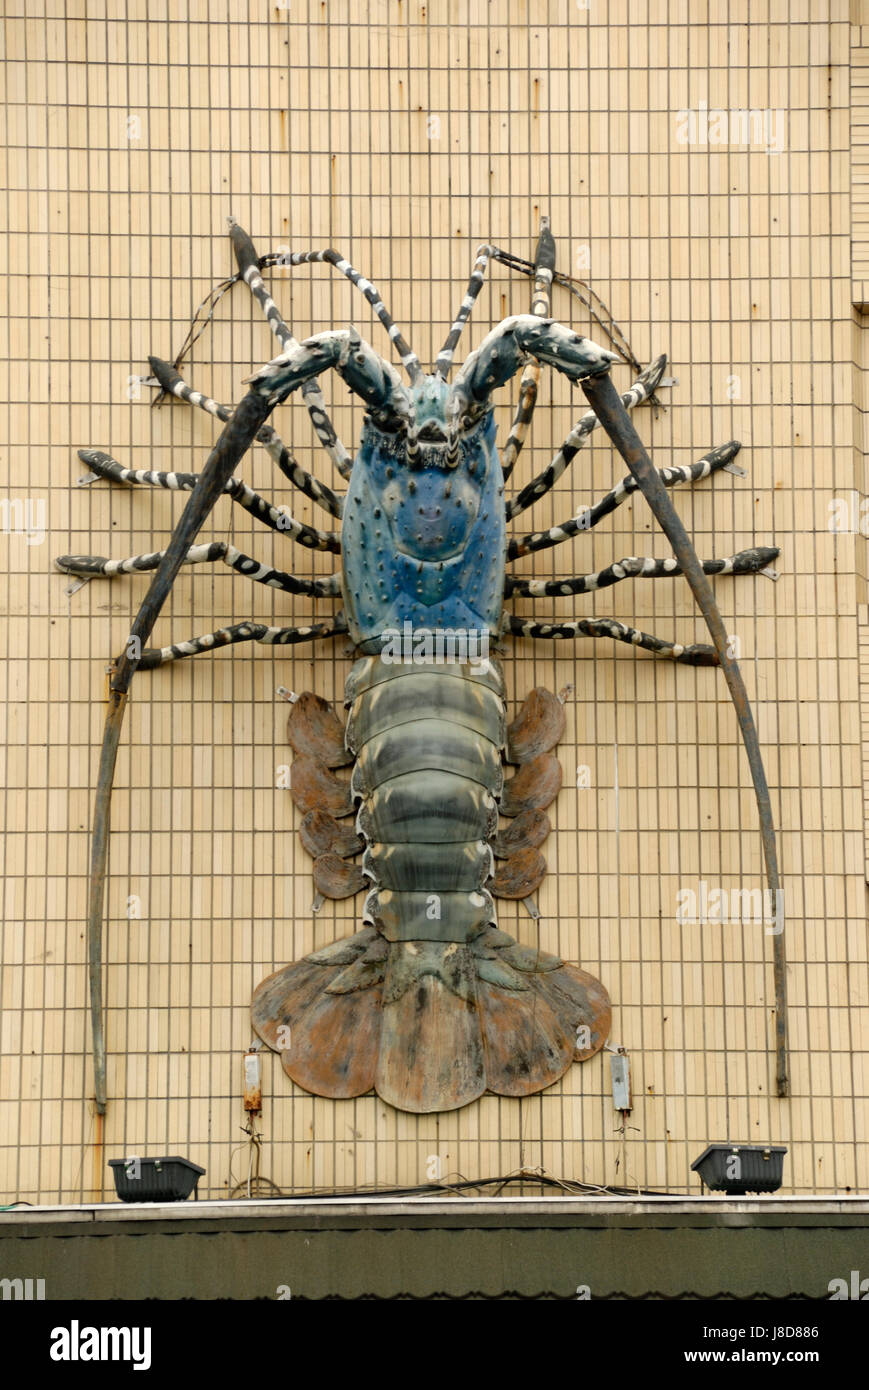 lobster, taiwan, flow, animal, asia, sculpture, ceramic tiles, facade, Stock Photo